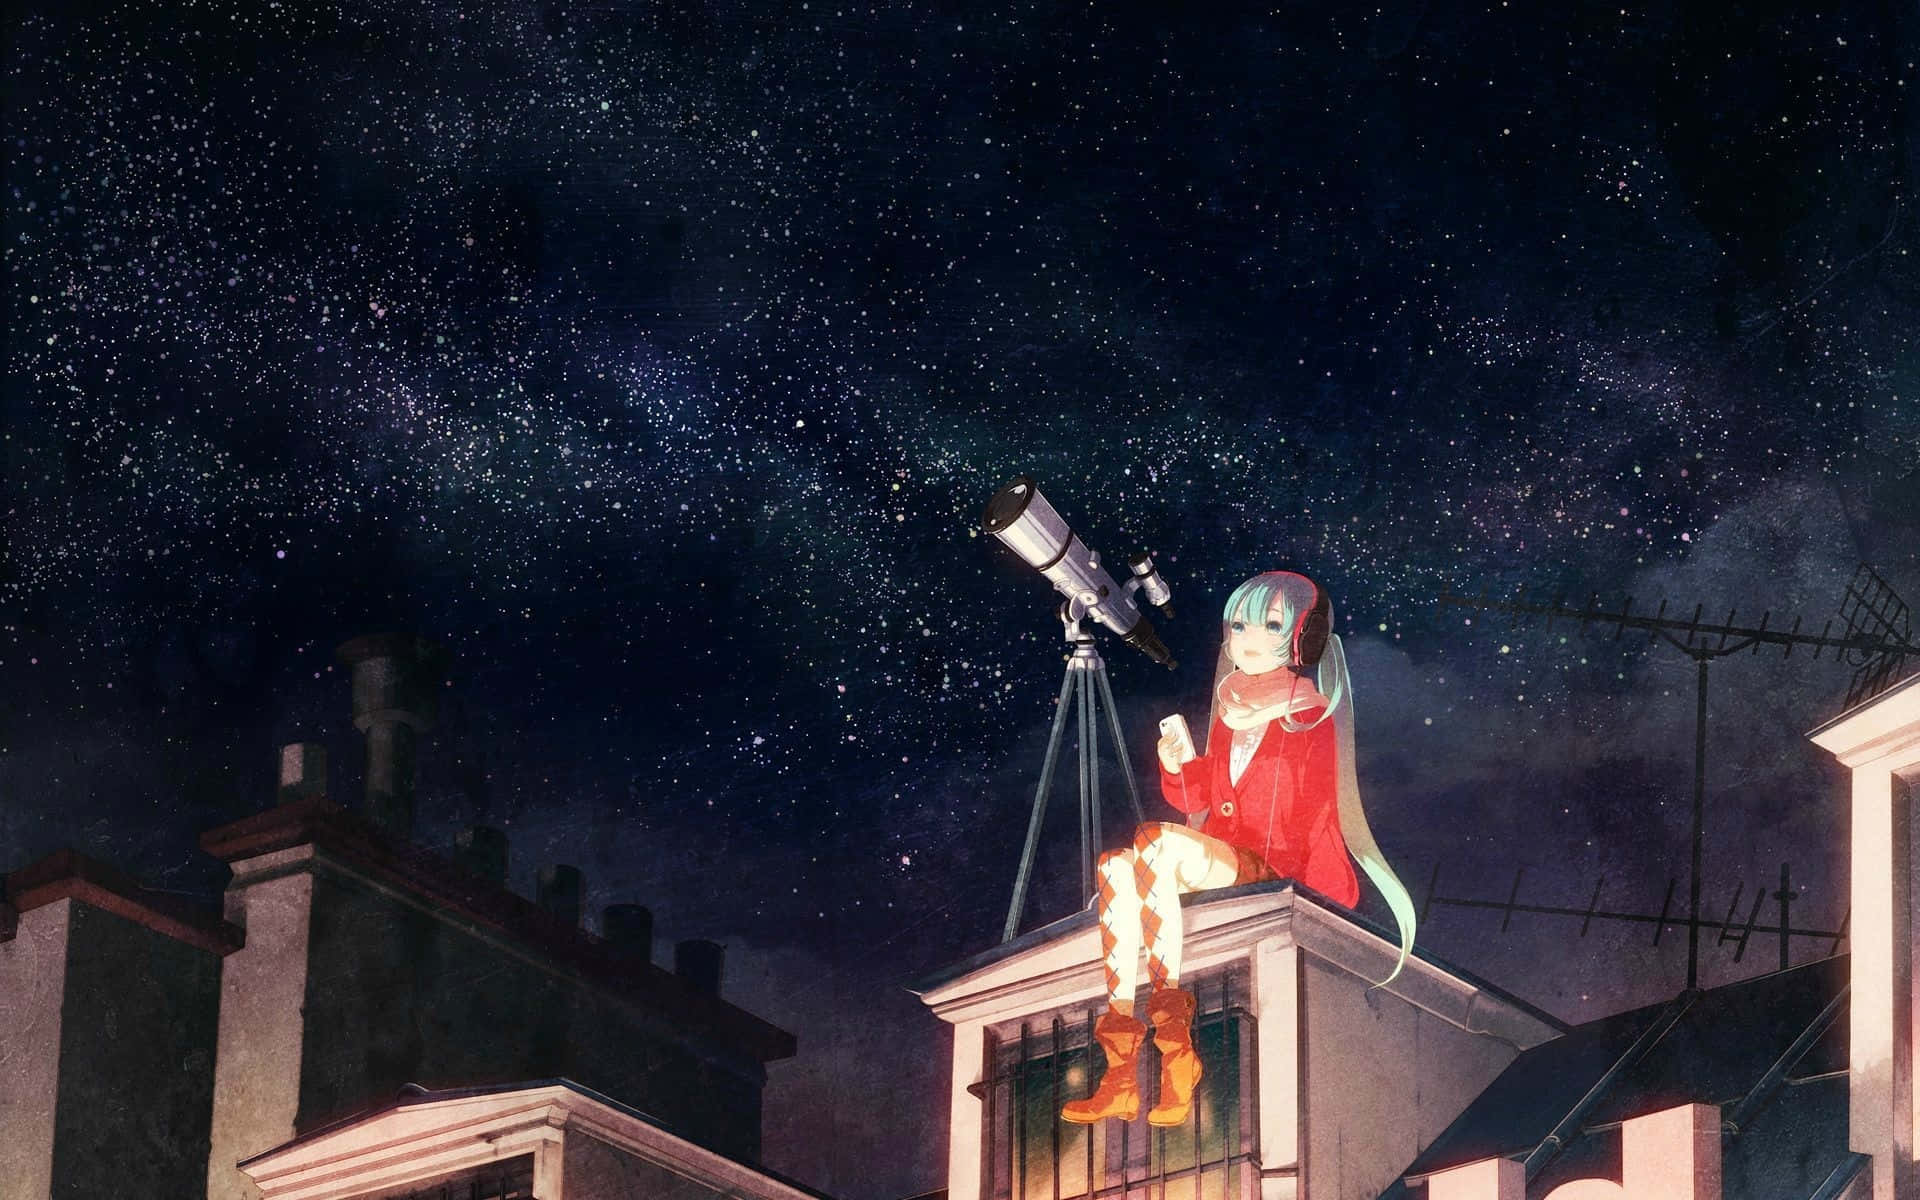 ArtStation - Serene Skyscapes | Anime Illustration of a Girl and Her Cat  Stargazing